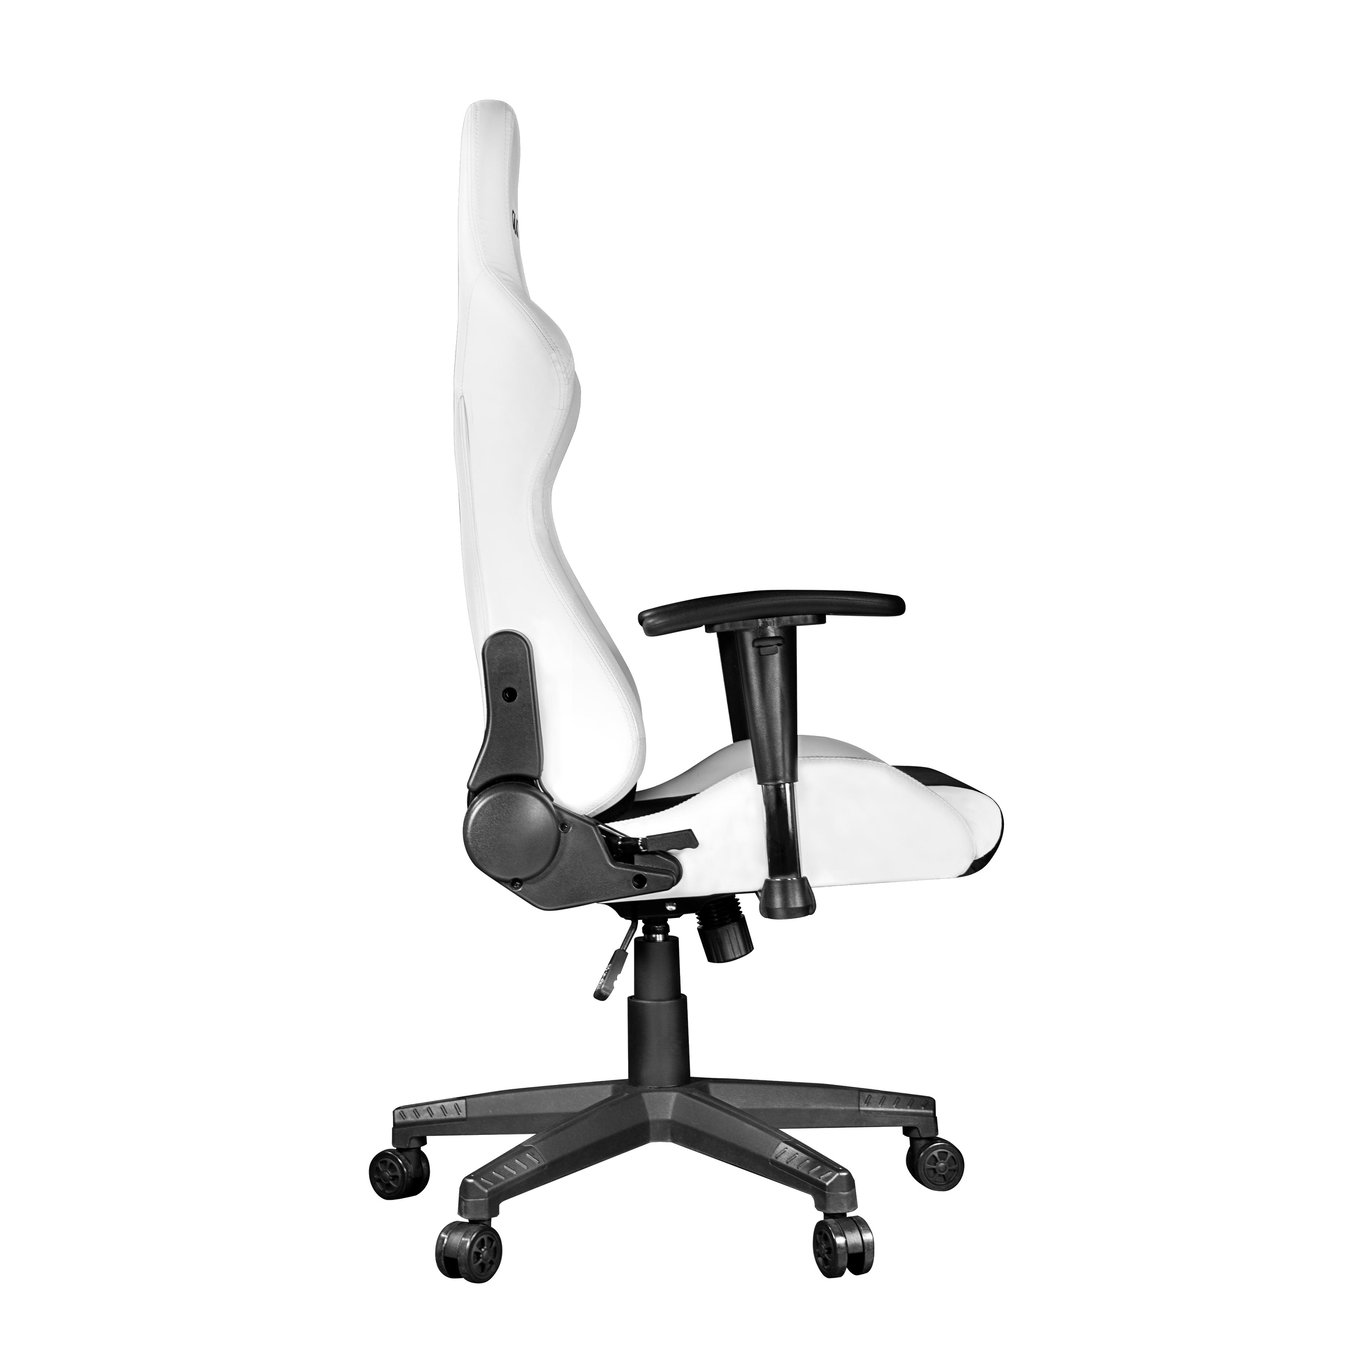 GALAX Gaming Chair Series GC-04  - White -4